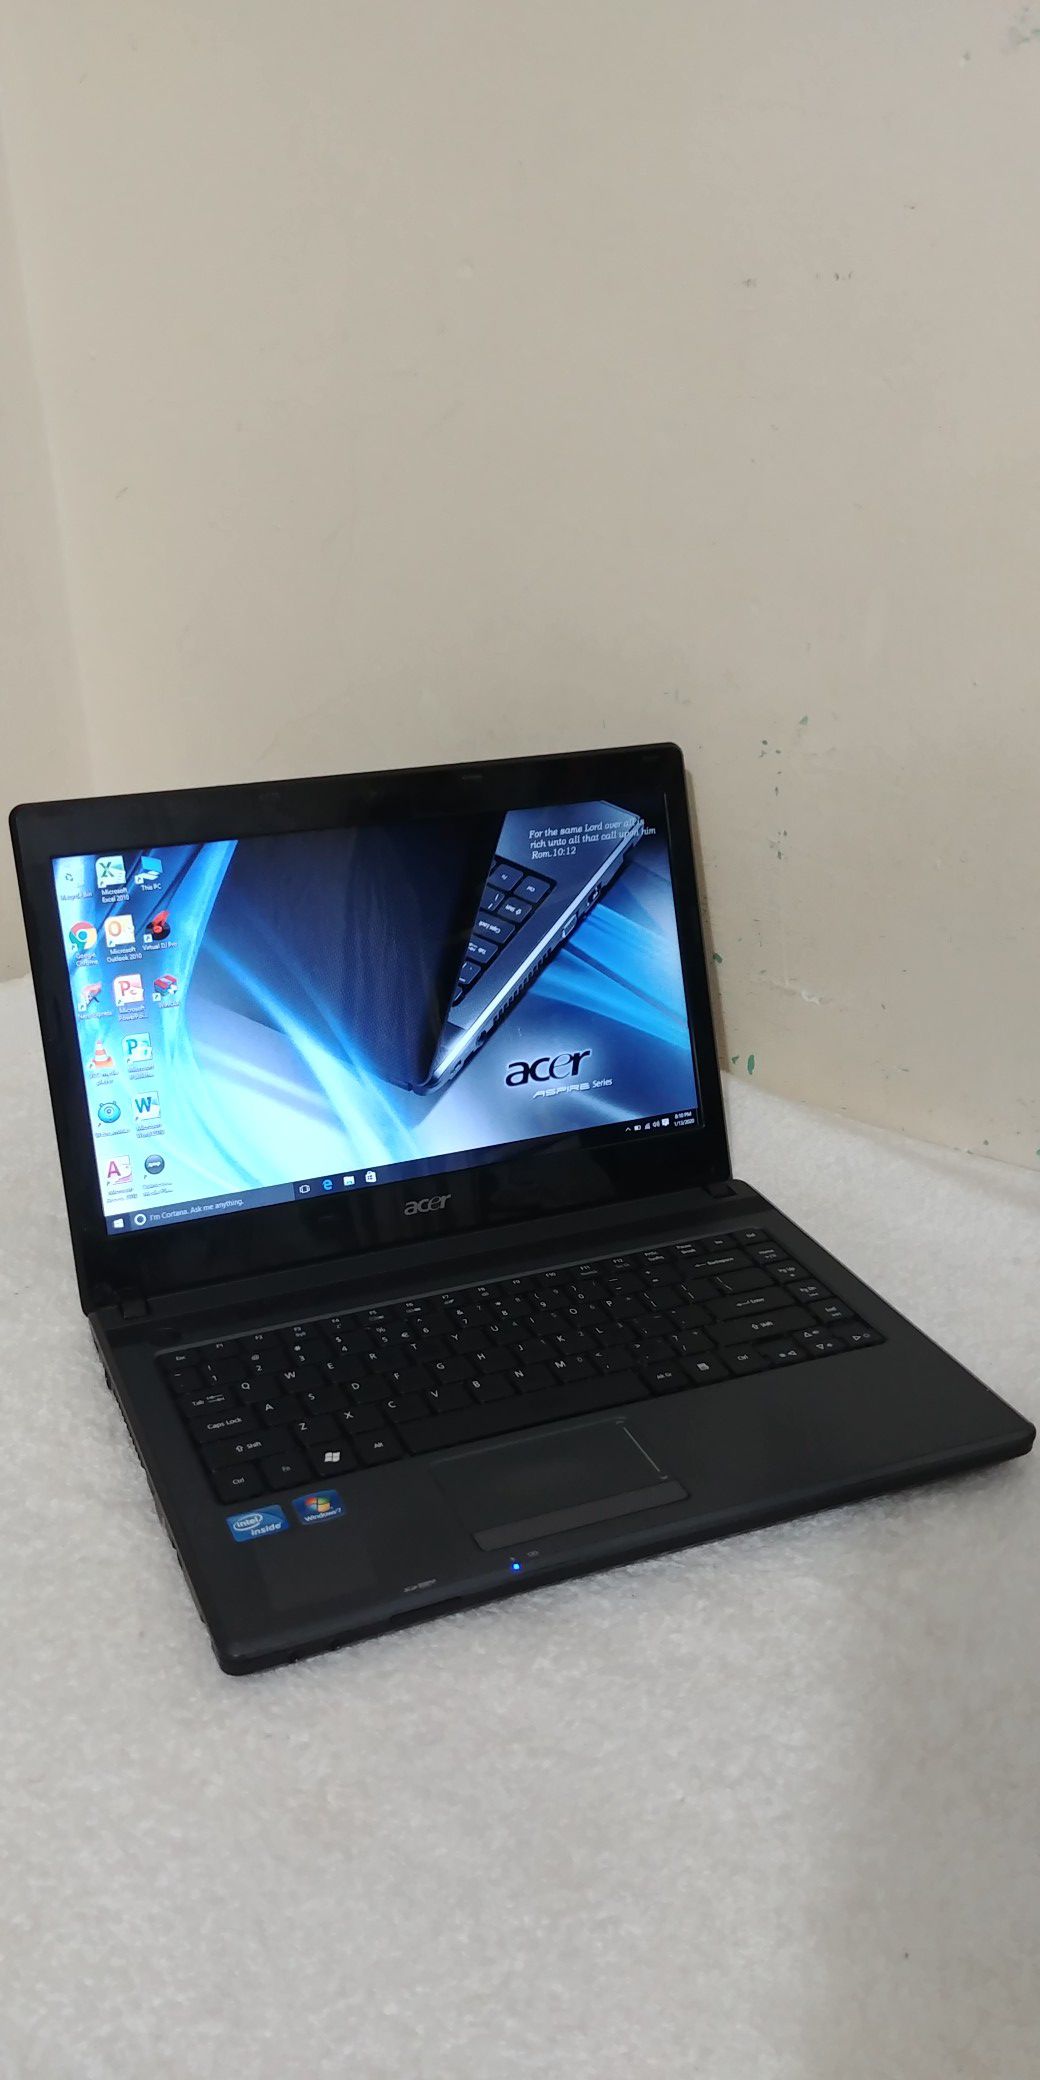 14" Intel Celeron Acer Laptop, 320GB HDD, 4GB RAM, Inbuilt Bluetooth, DVD RW Drive, Media Card Reader And a Webcam.